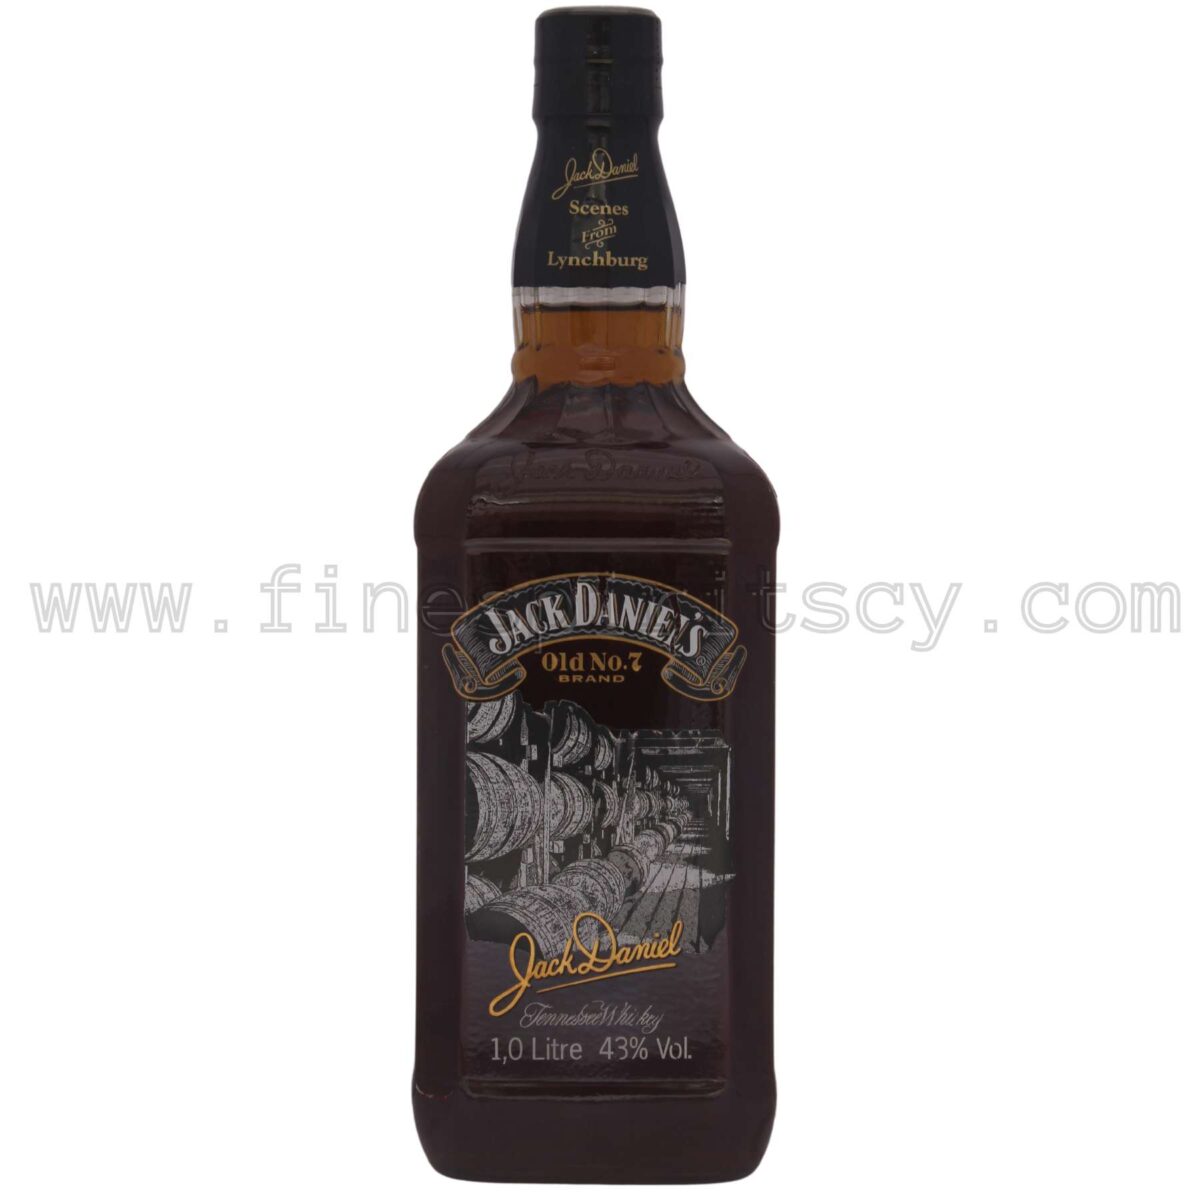 Jack Daniels Scenes From Lynchburg No. 10 Price FS Cyprus Whisky Whiskey CY